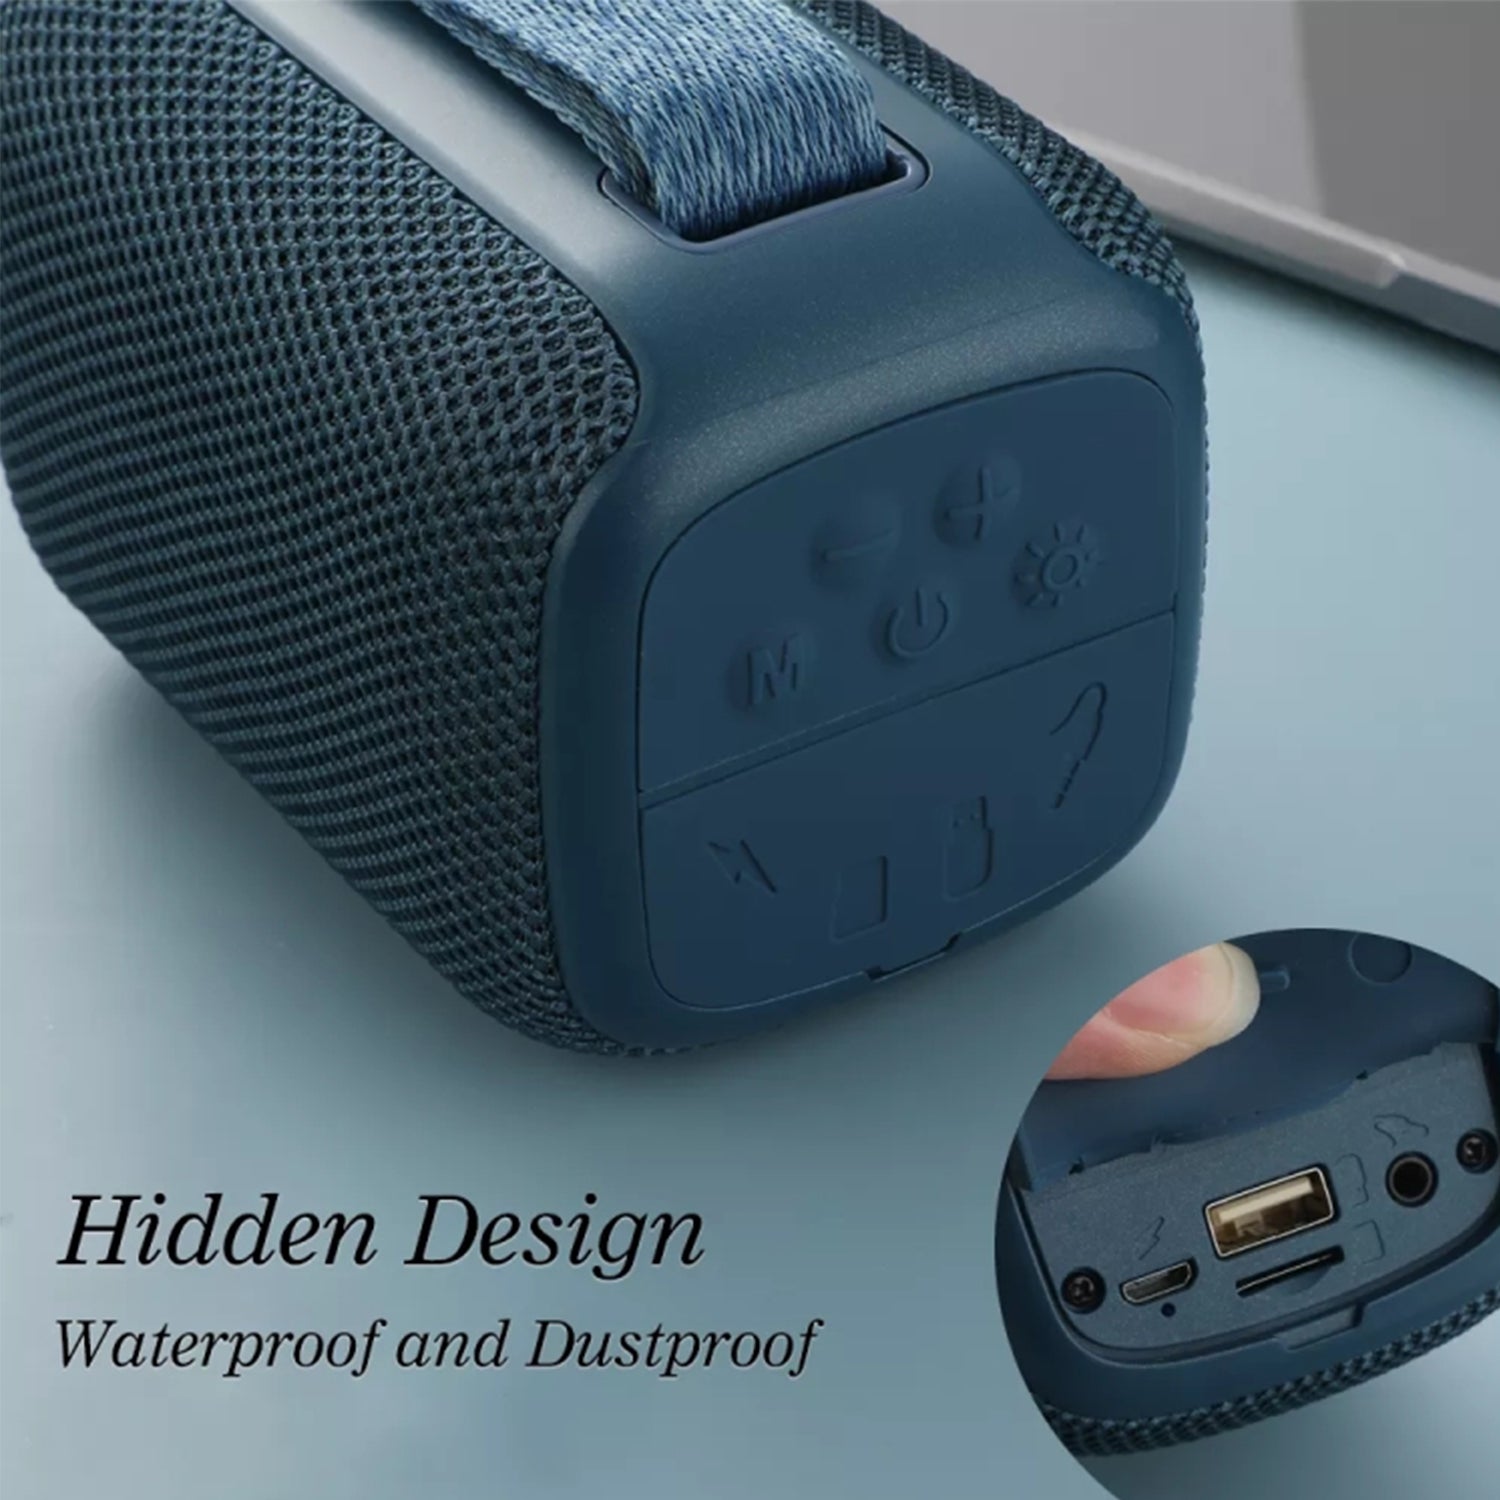 USB wireless portable Bluetooth speaker with fabrics belt